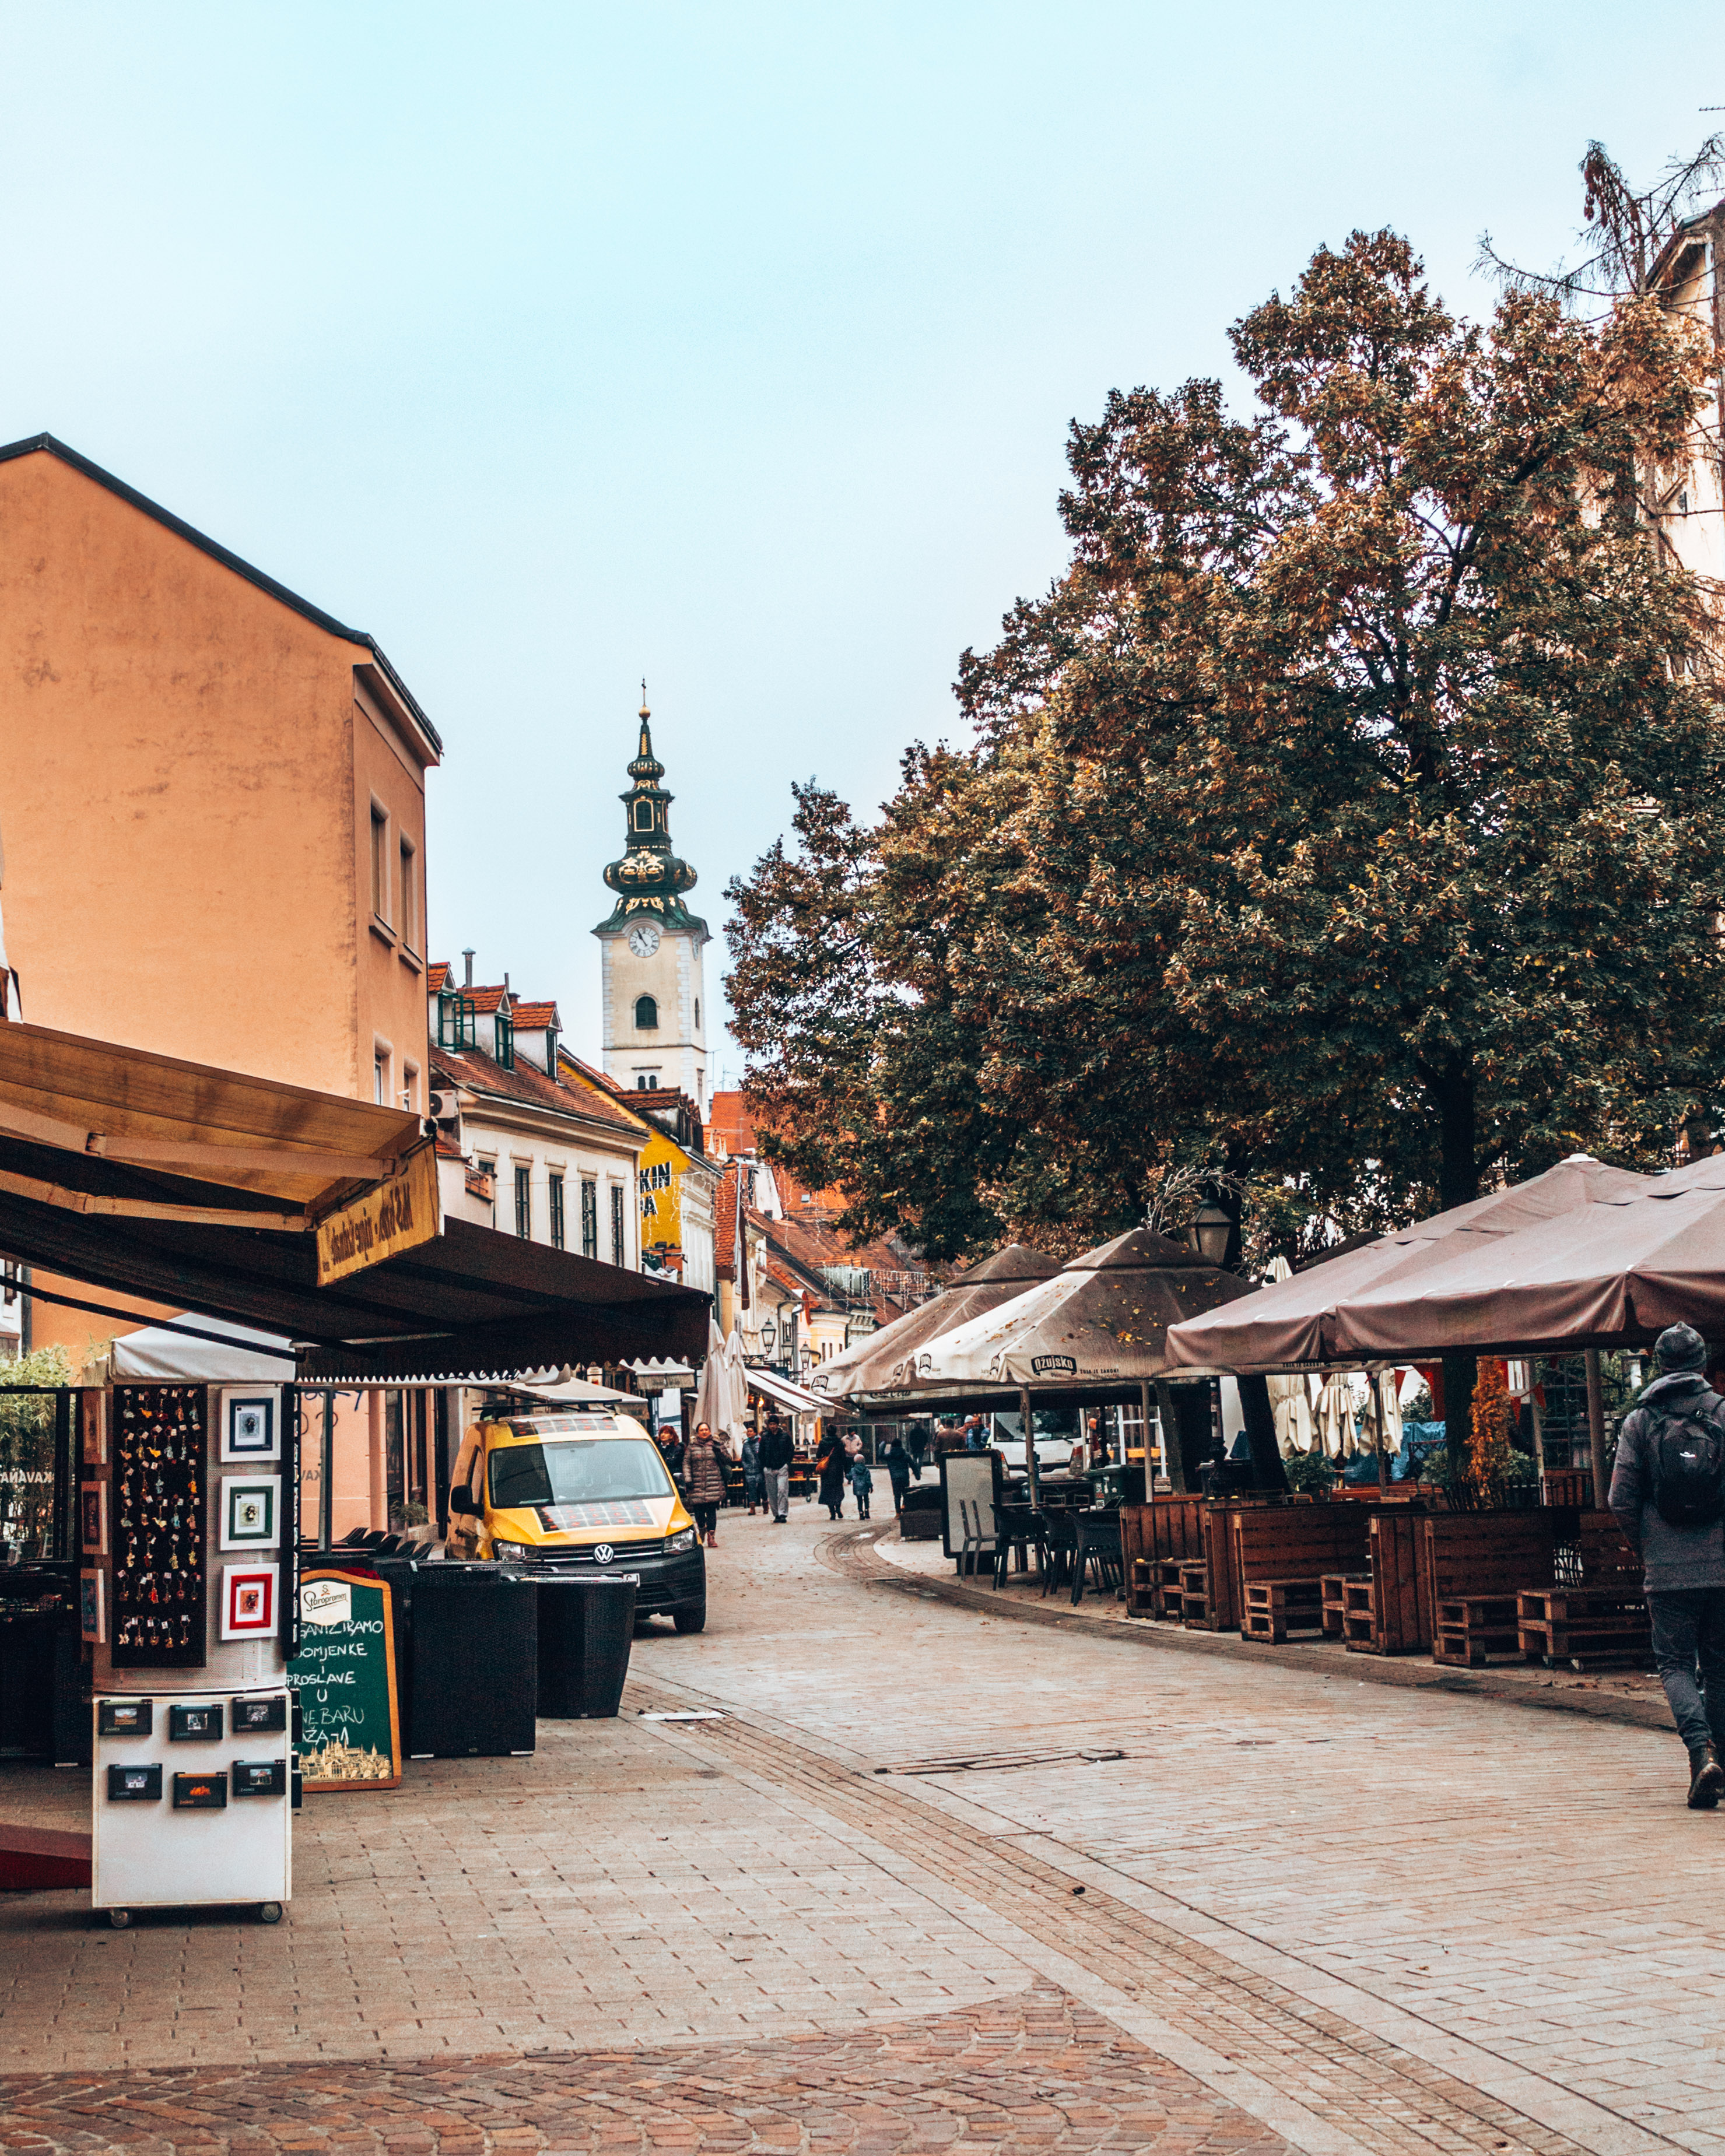 The Tkalčićeva shopping street in Zagreb, Croatia